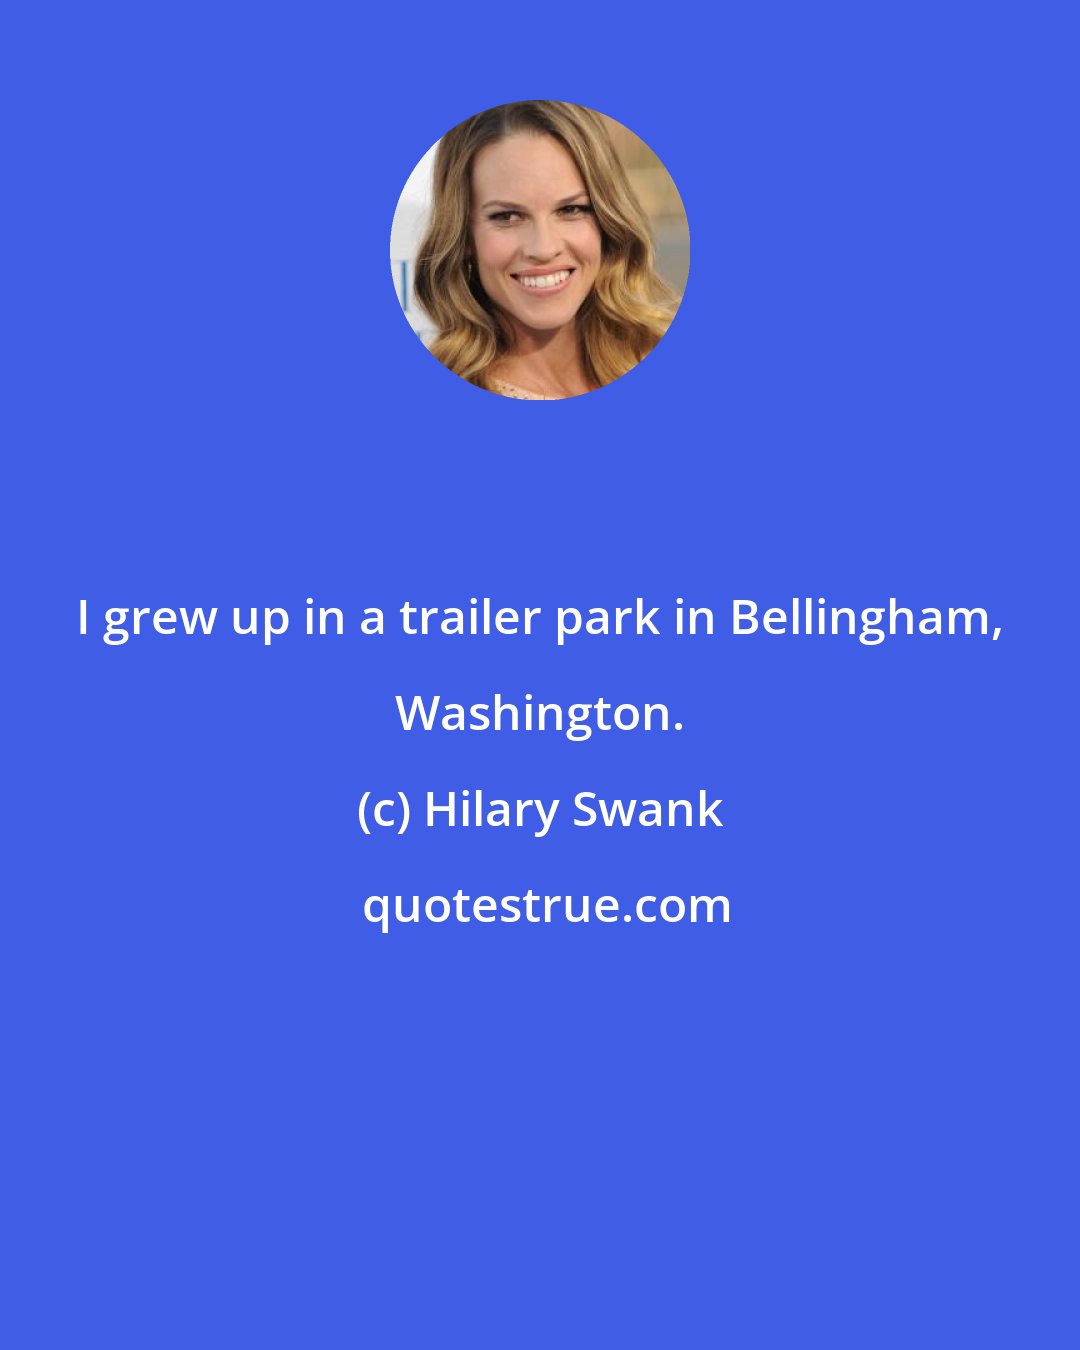 Hilary Swank: I grew up in a trailer park in Bellingham, Washington.